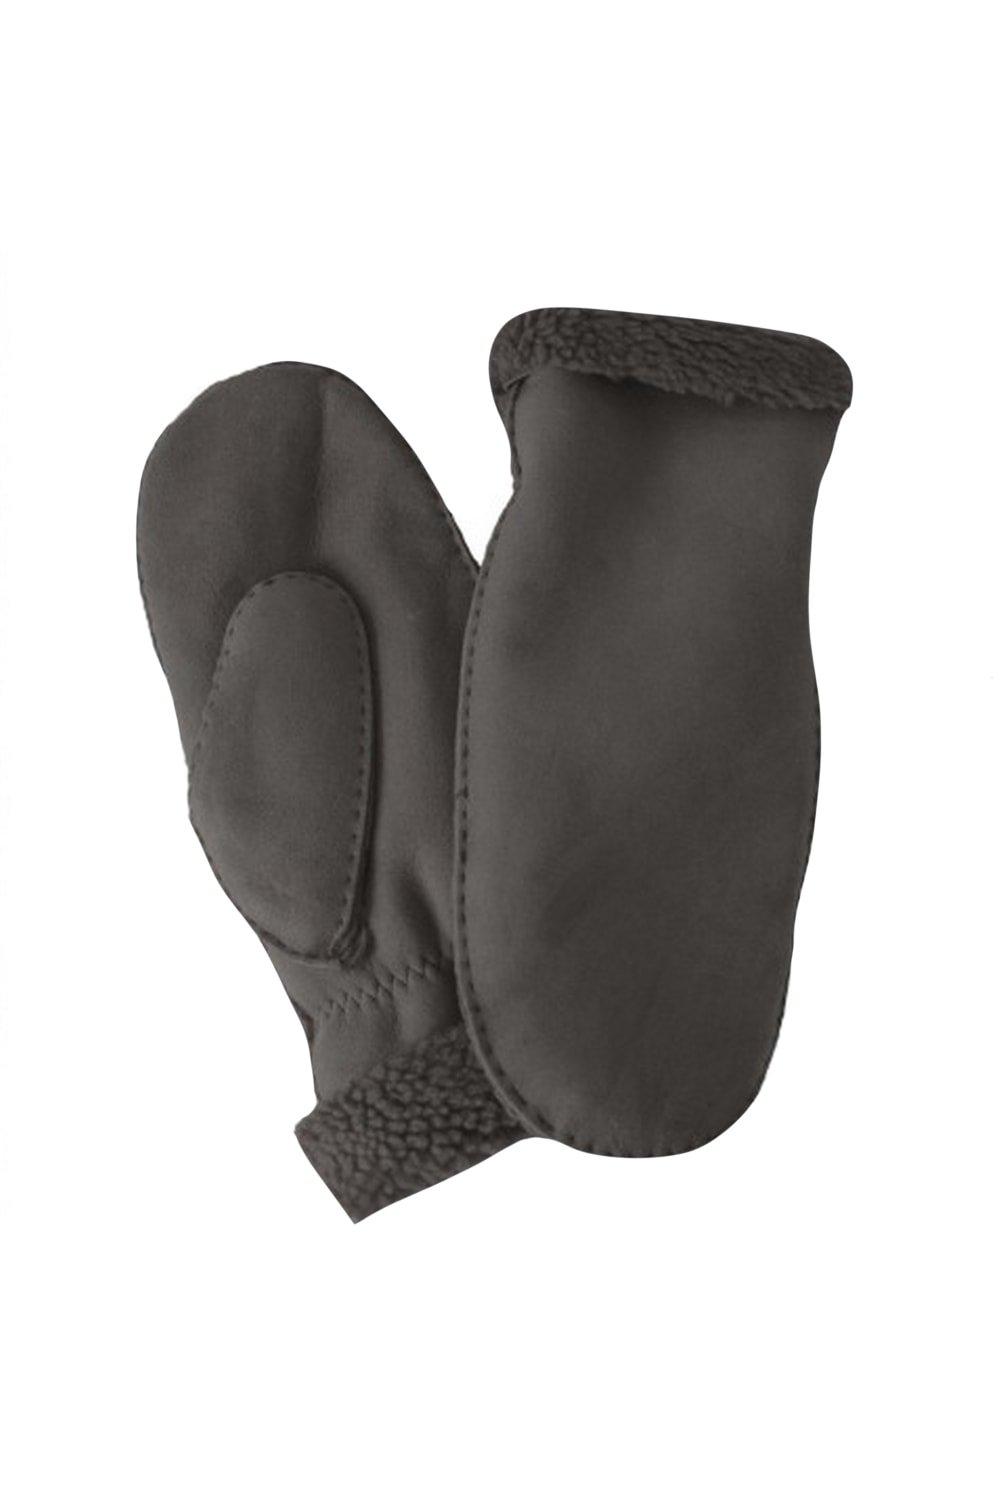 Полные рукавицы из овчины Eastern Counties Leather, черный